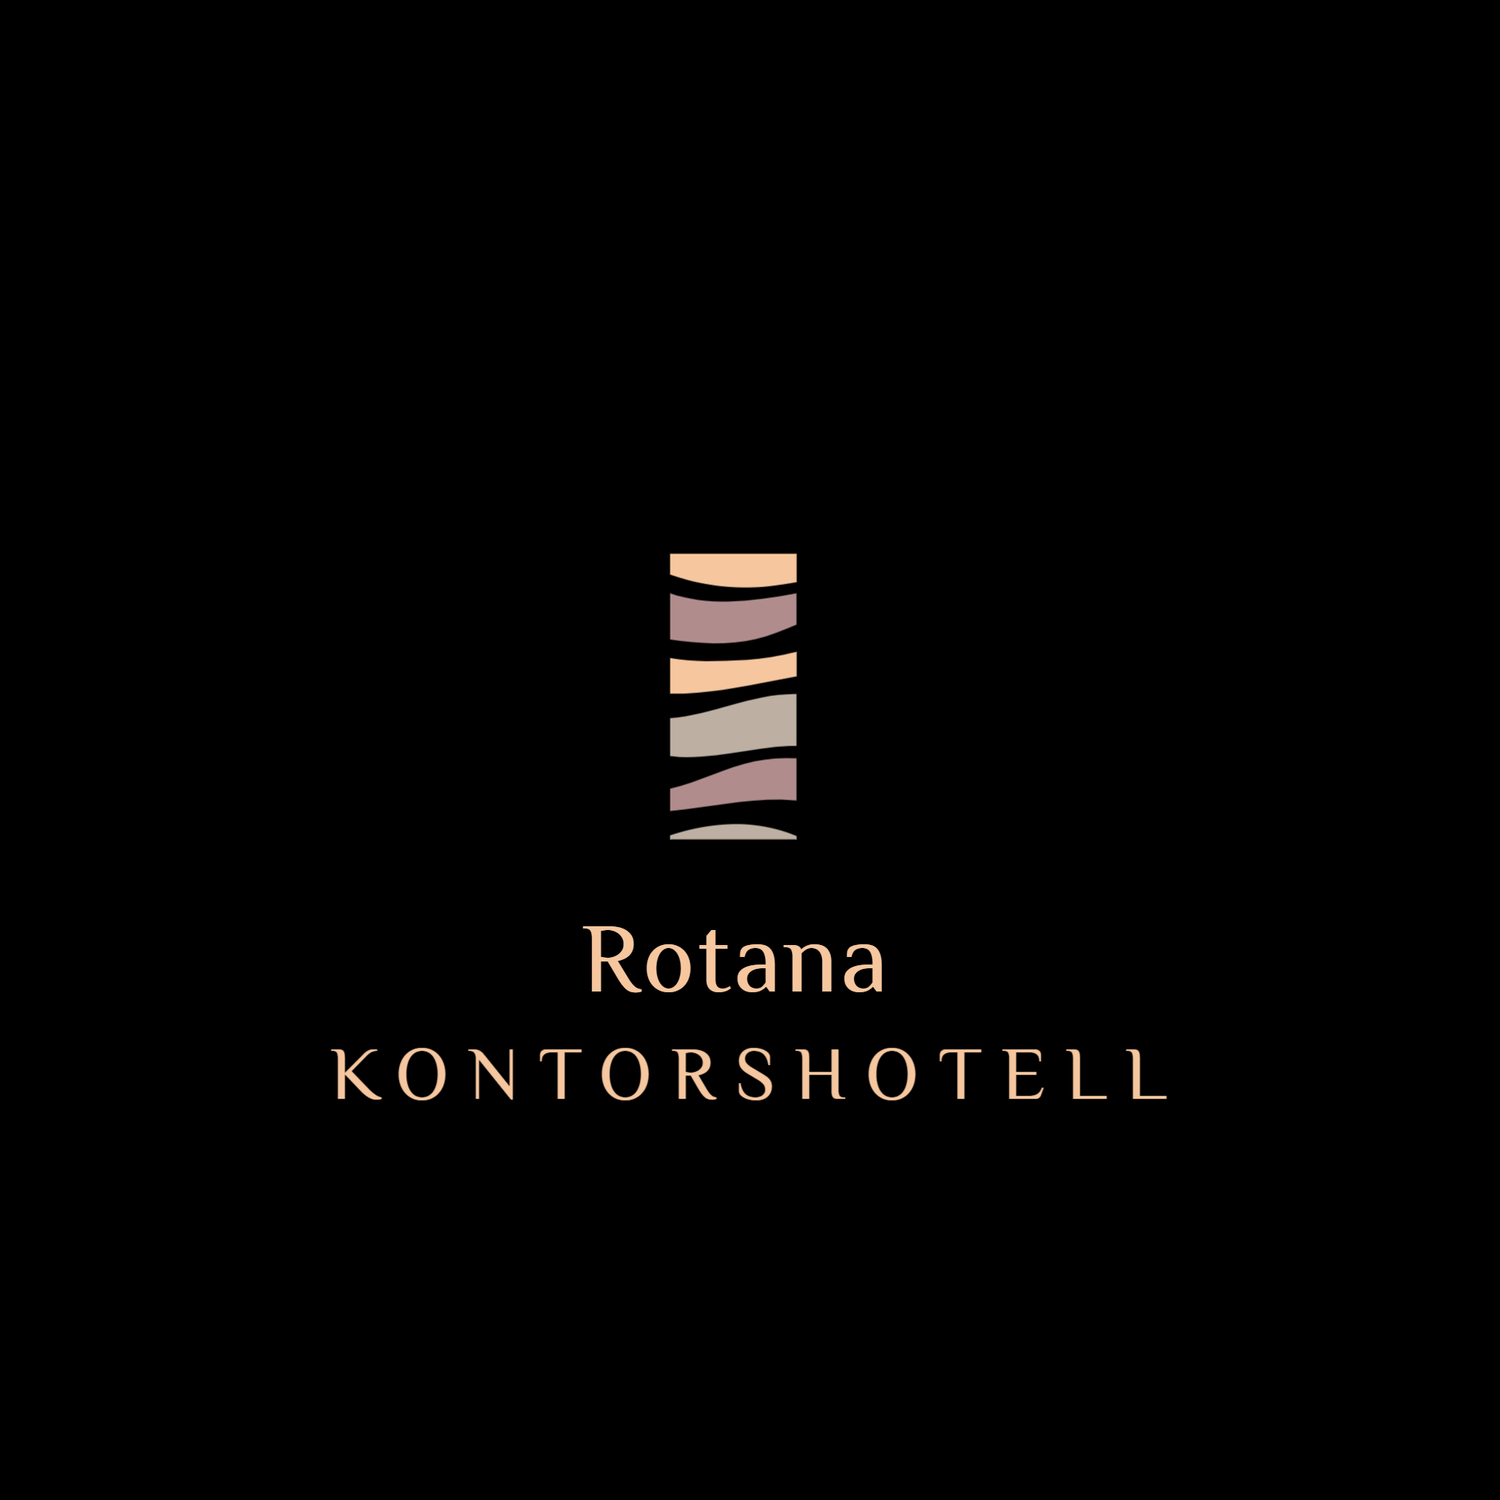 Rotana Kontorshotell